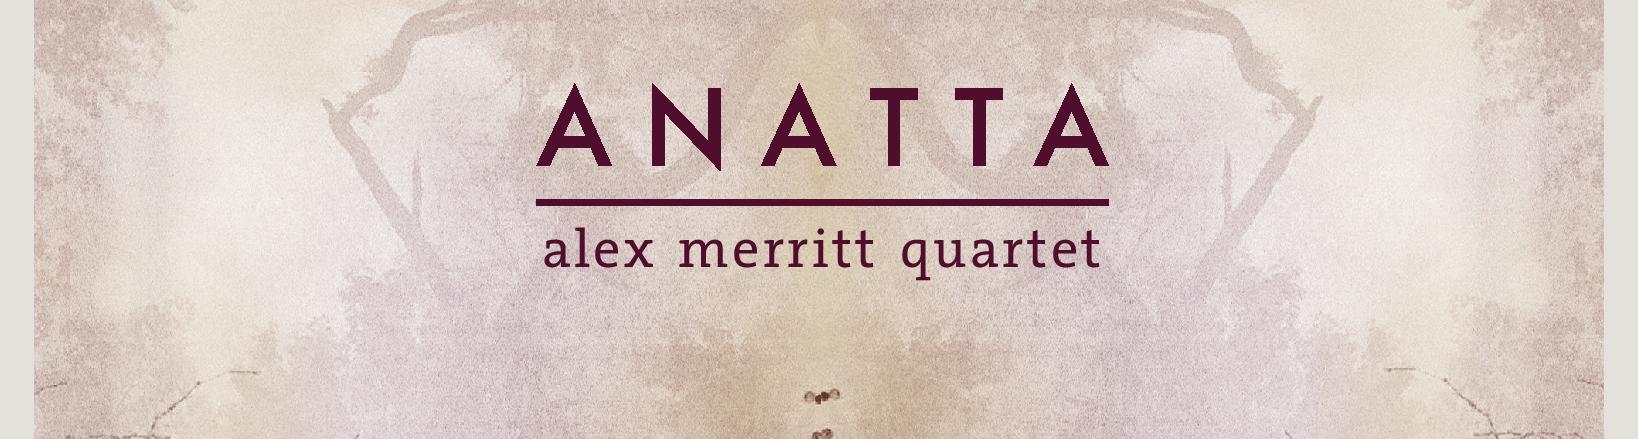 Alex Merritt Quartet - Anatta